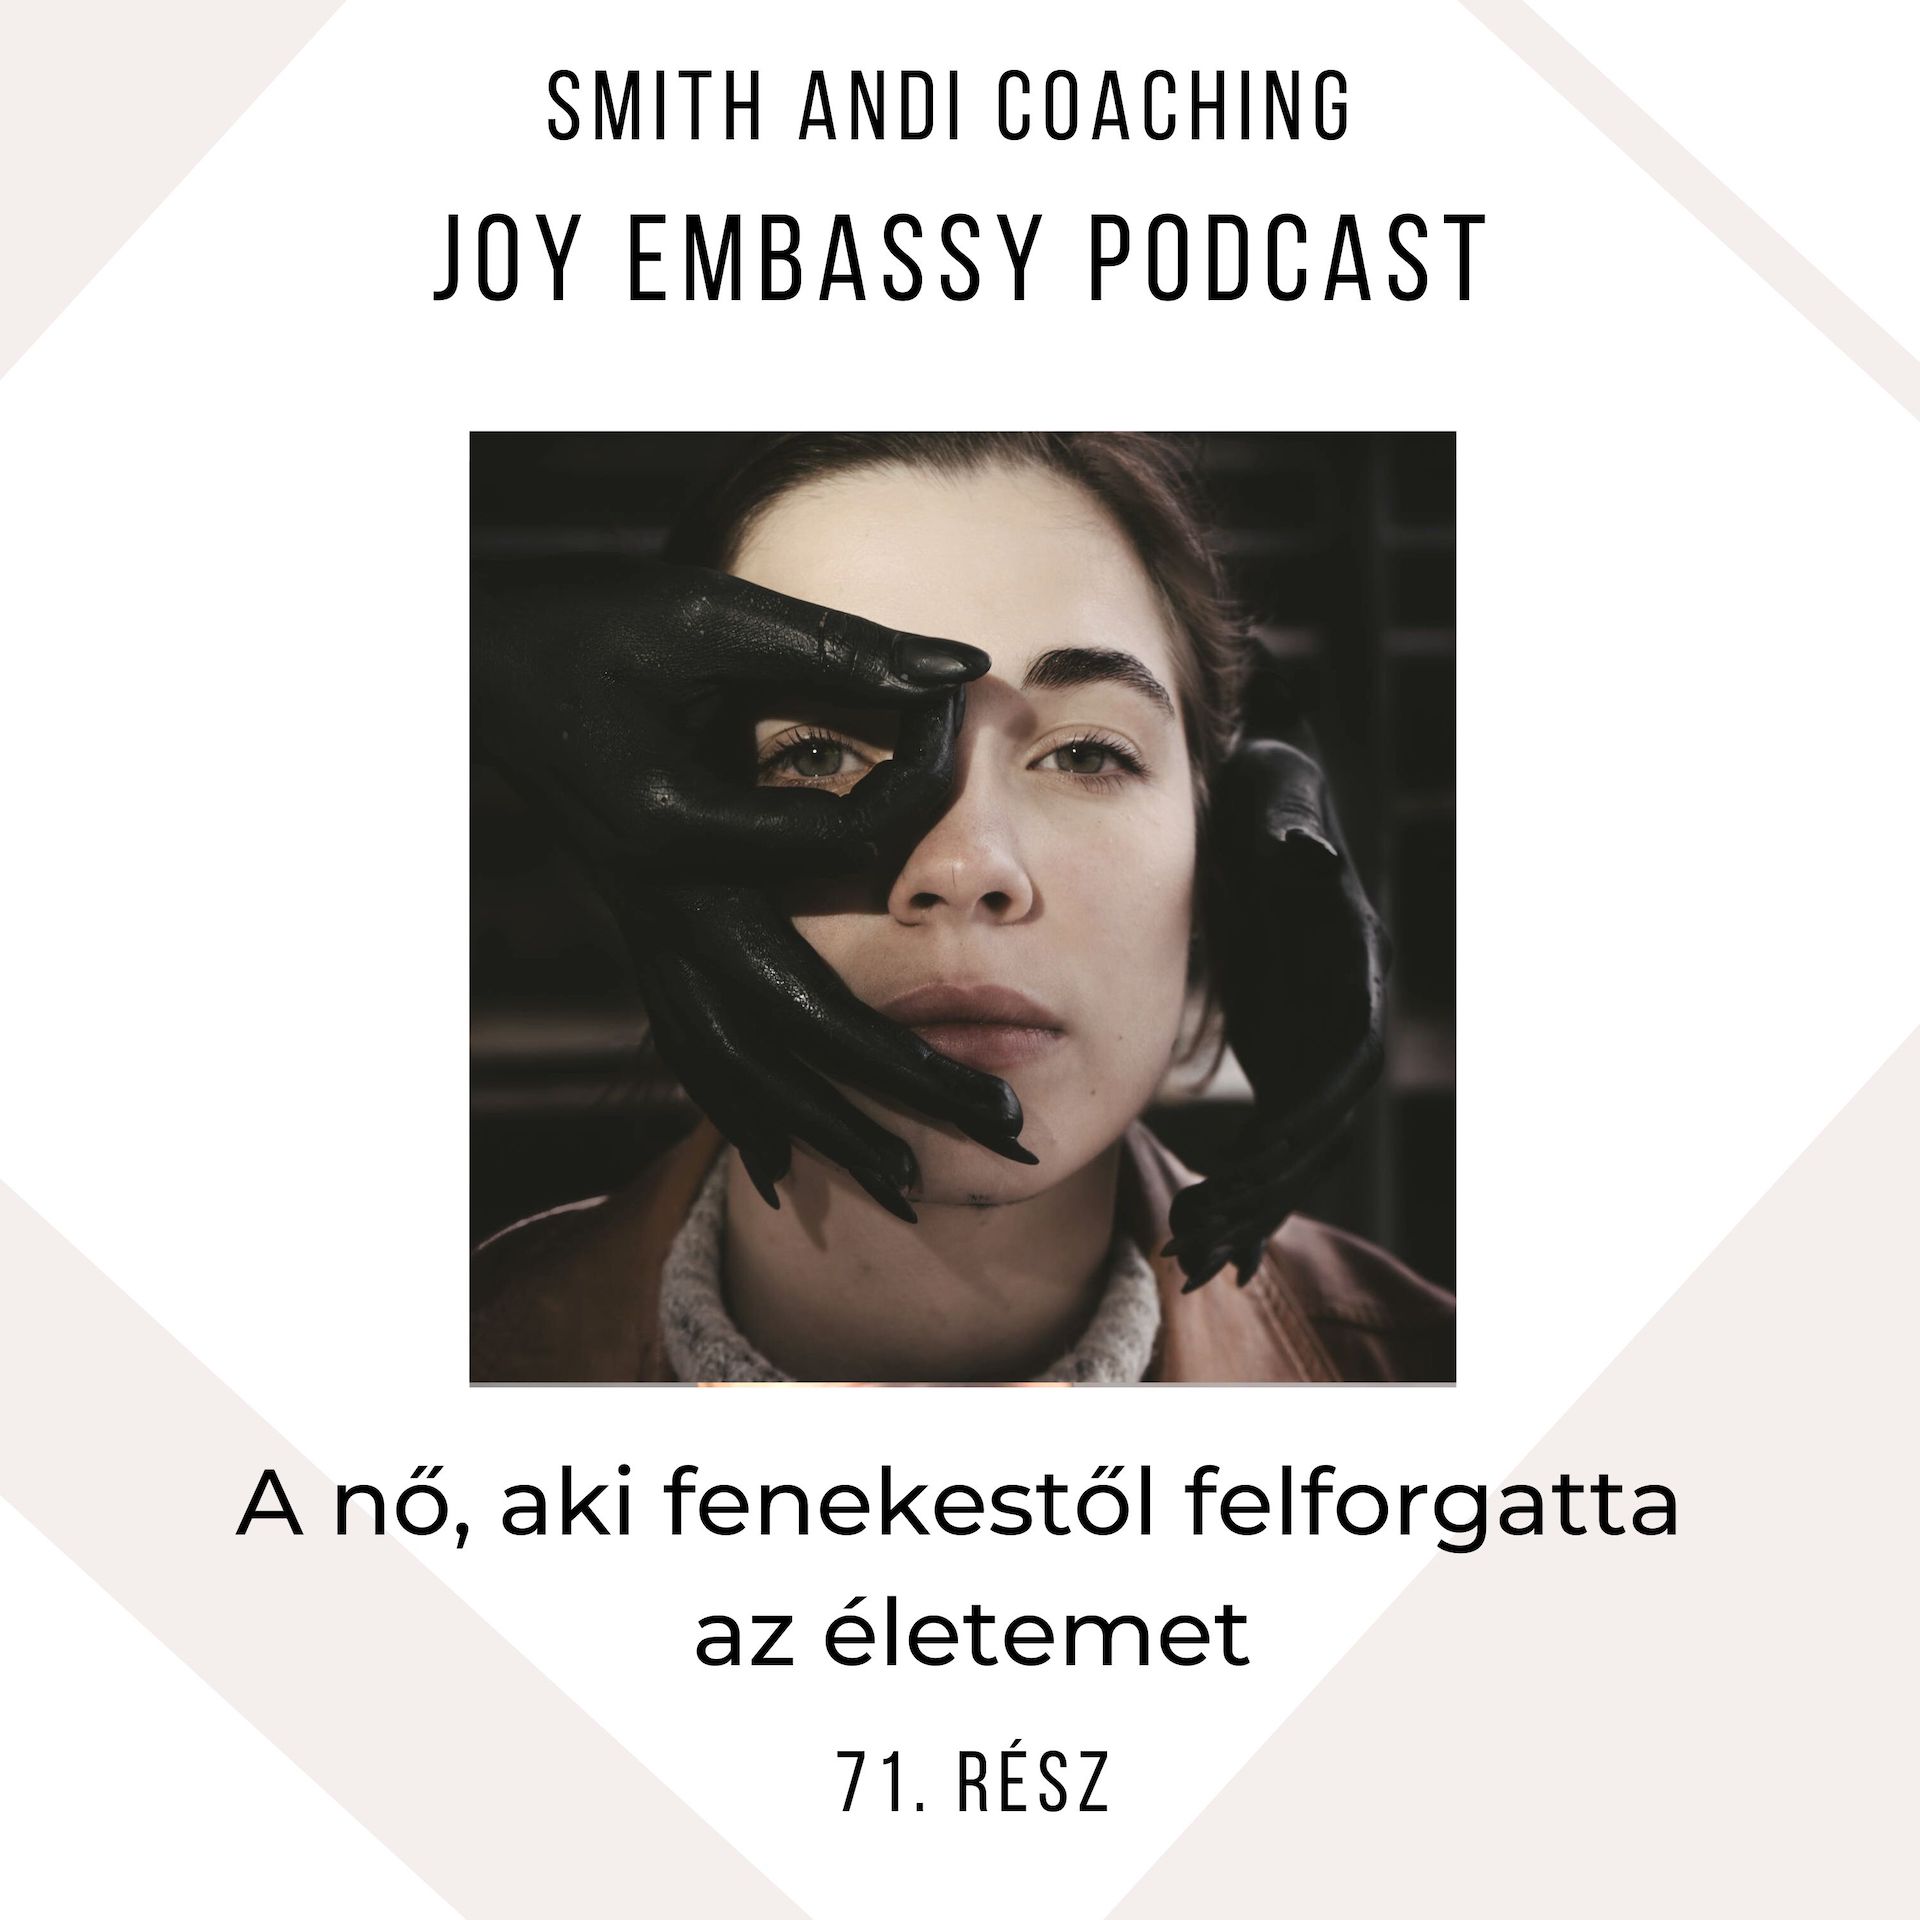 Artwork for podcast Joy Embassy